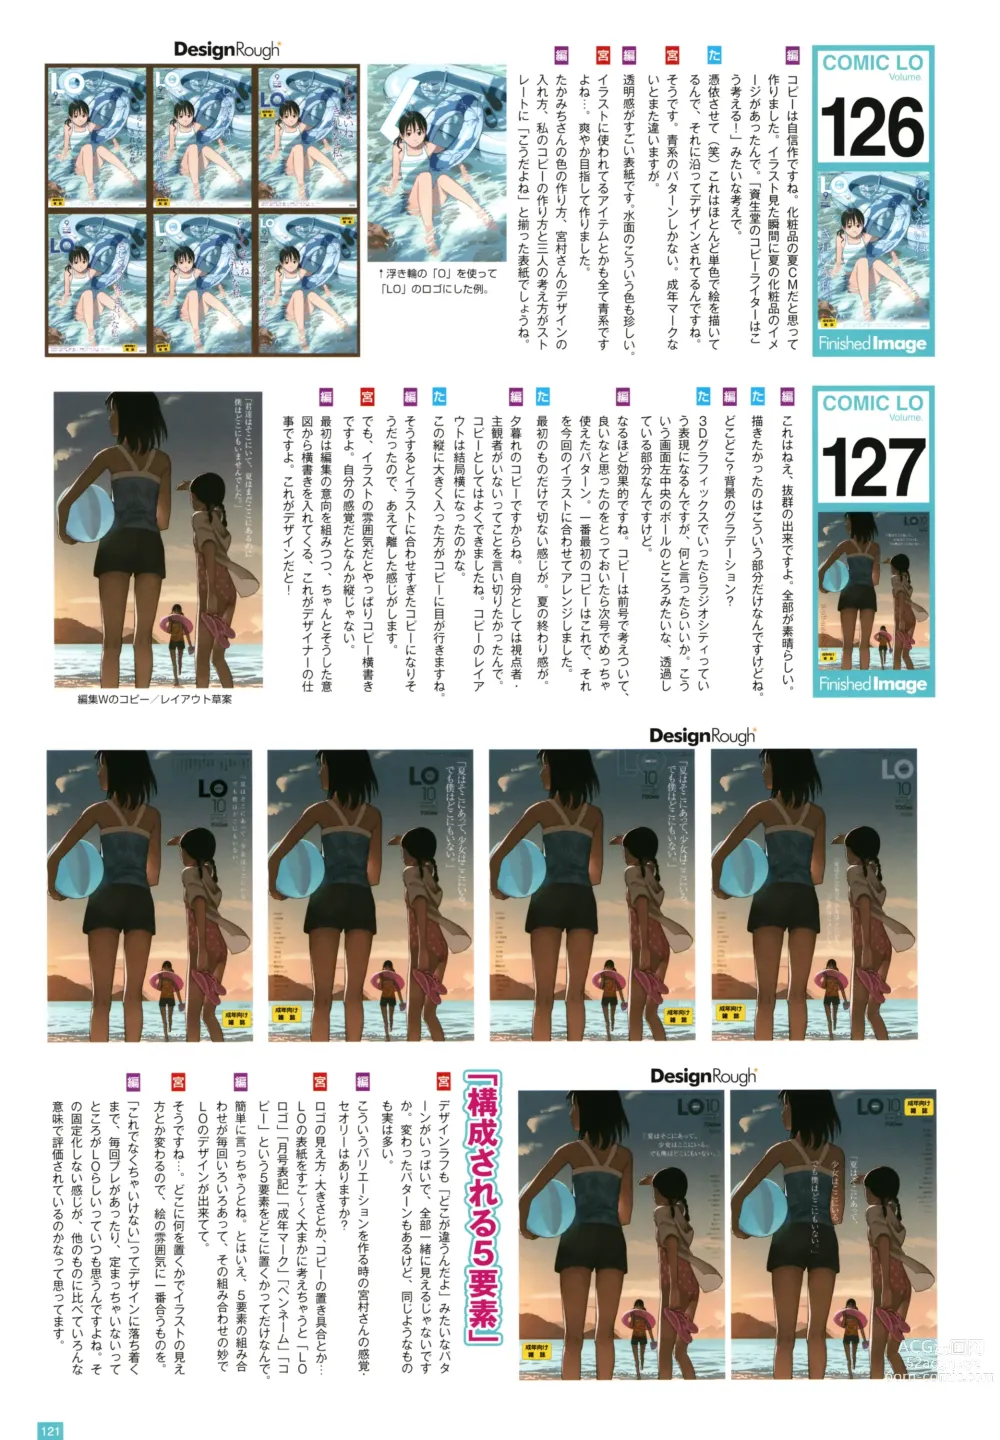 Page 124 of manga LO Artbook 2-B TAKAMICHI LO-fi WORKS